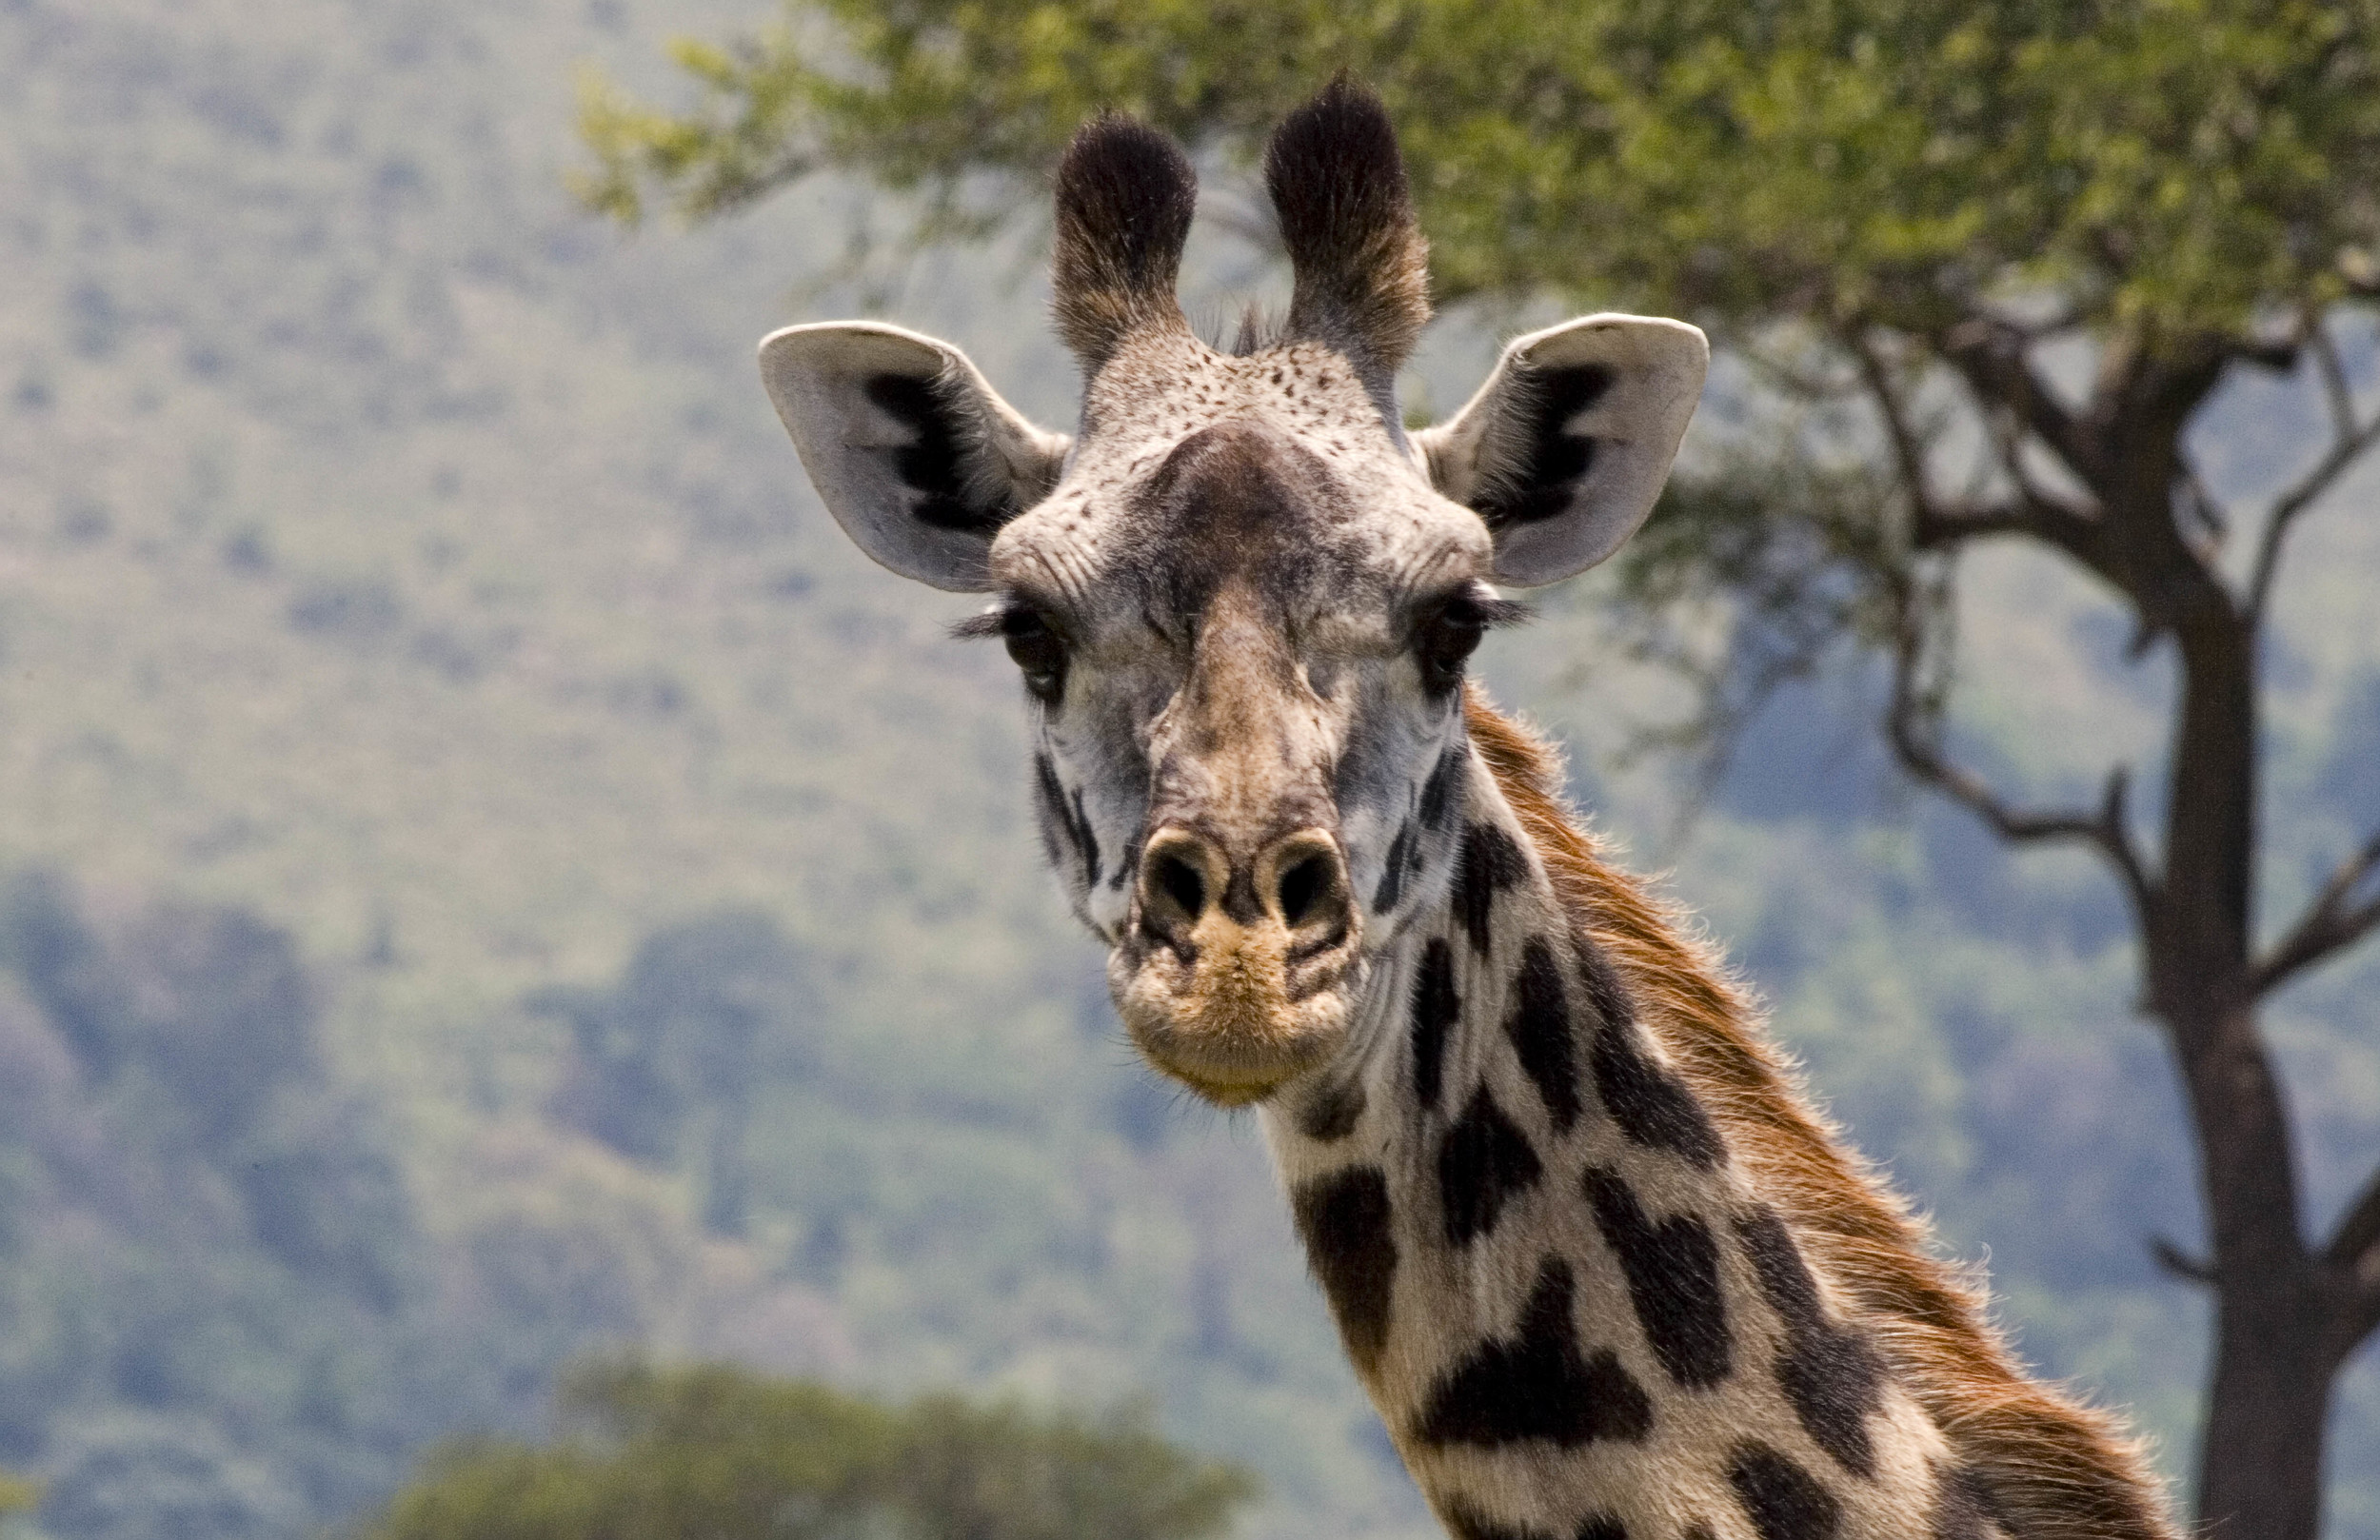 Giraffe Tanzania